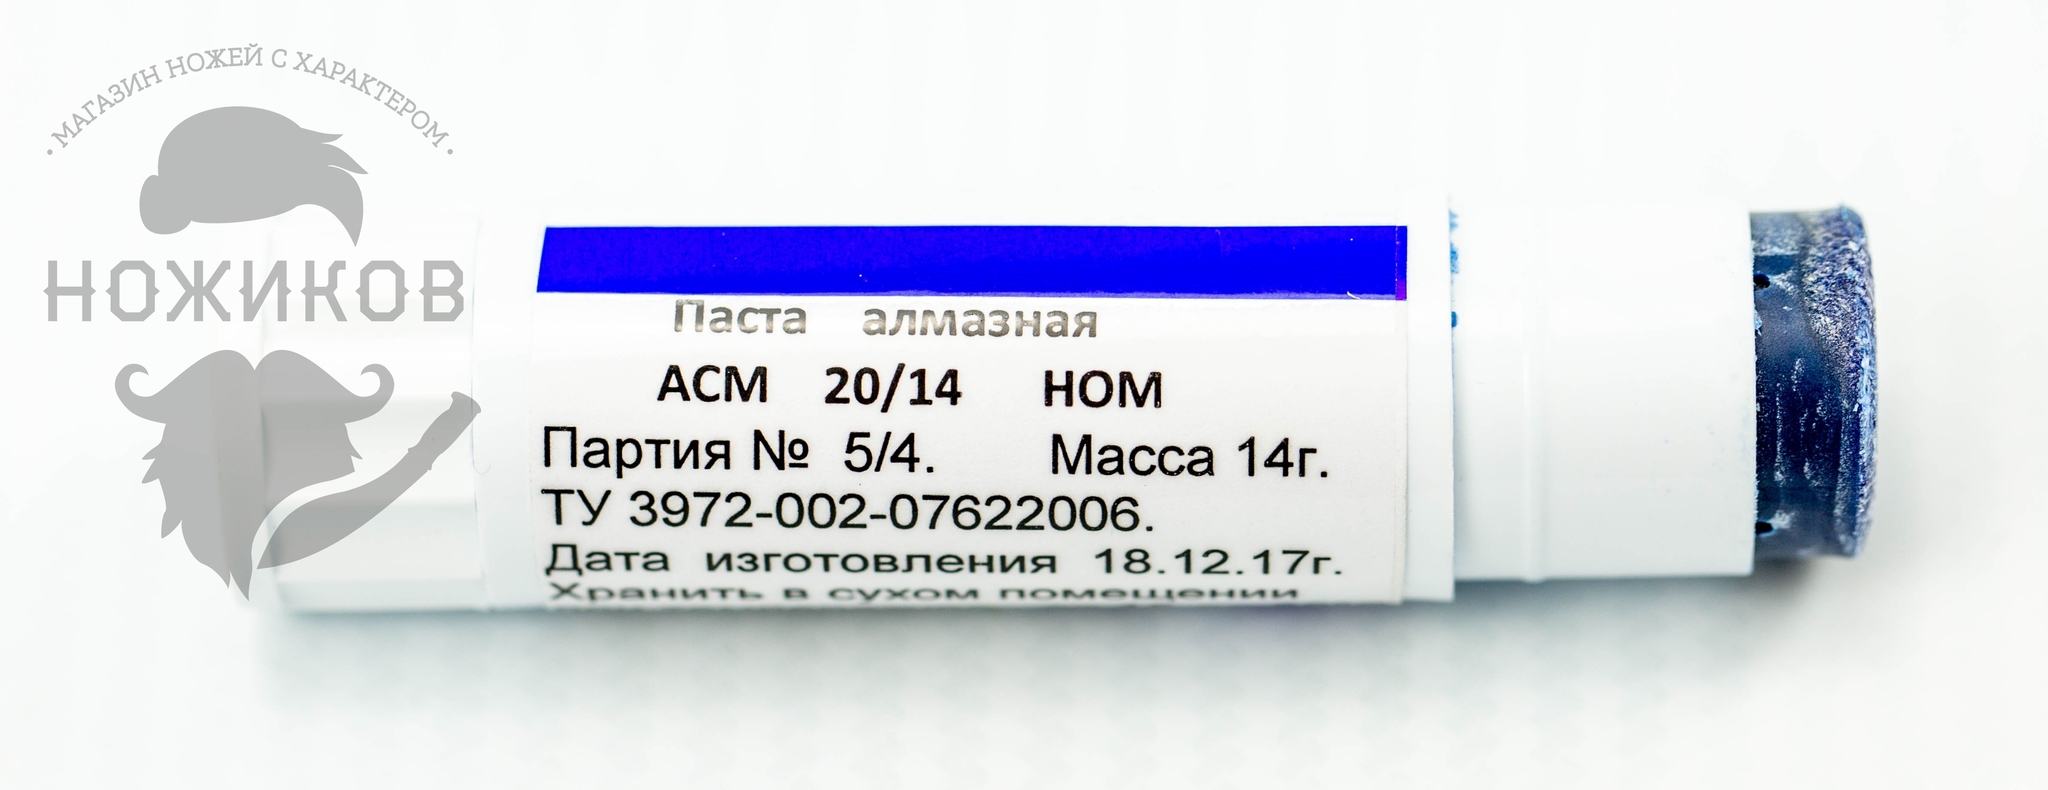 Алмазная паста HOM ACM 20/14, 14 гр. от Ножиков